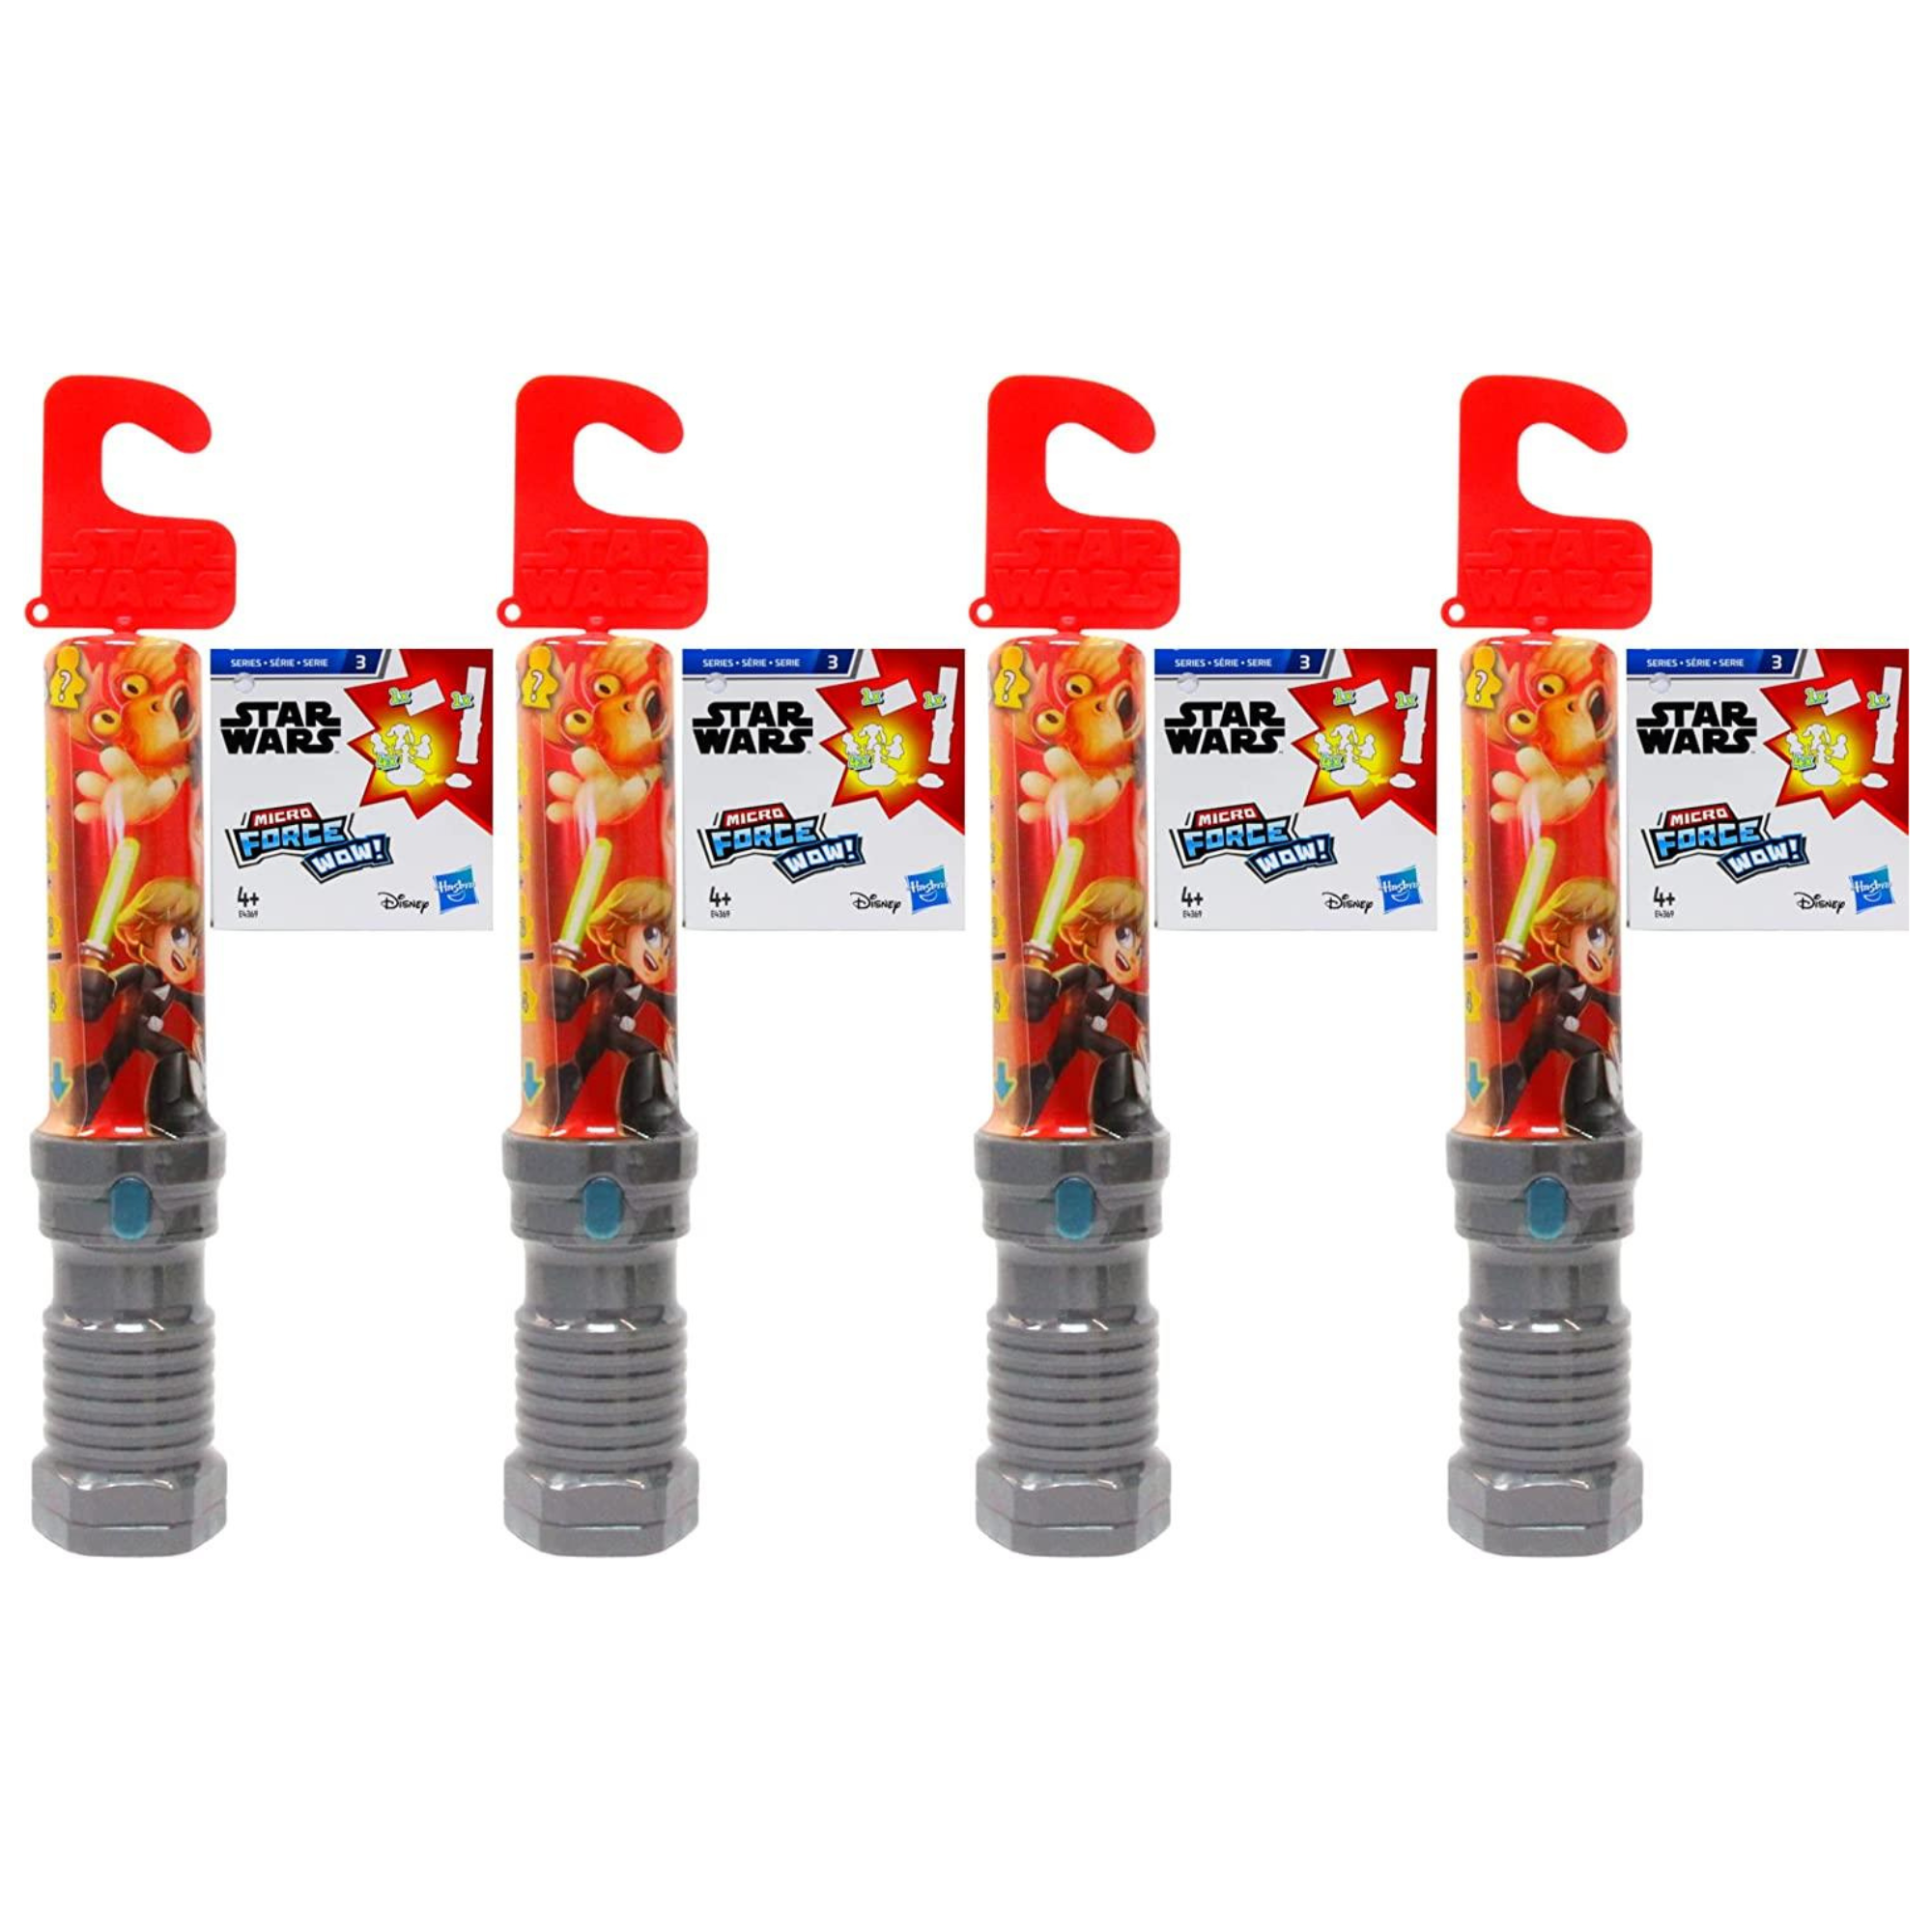 Star Wars Micro Force WOW Blind Bag Sabres Pack of 4-4x Characters & 1x Sticker Set Per Sabre - Series 3 - Toptoys2u